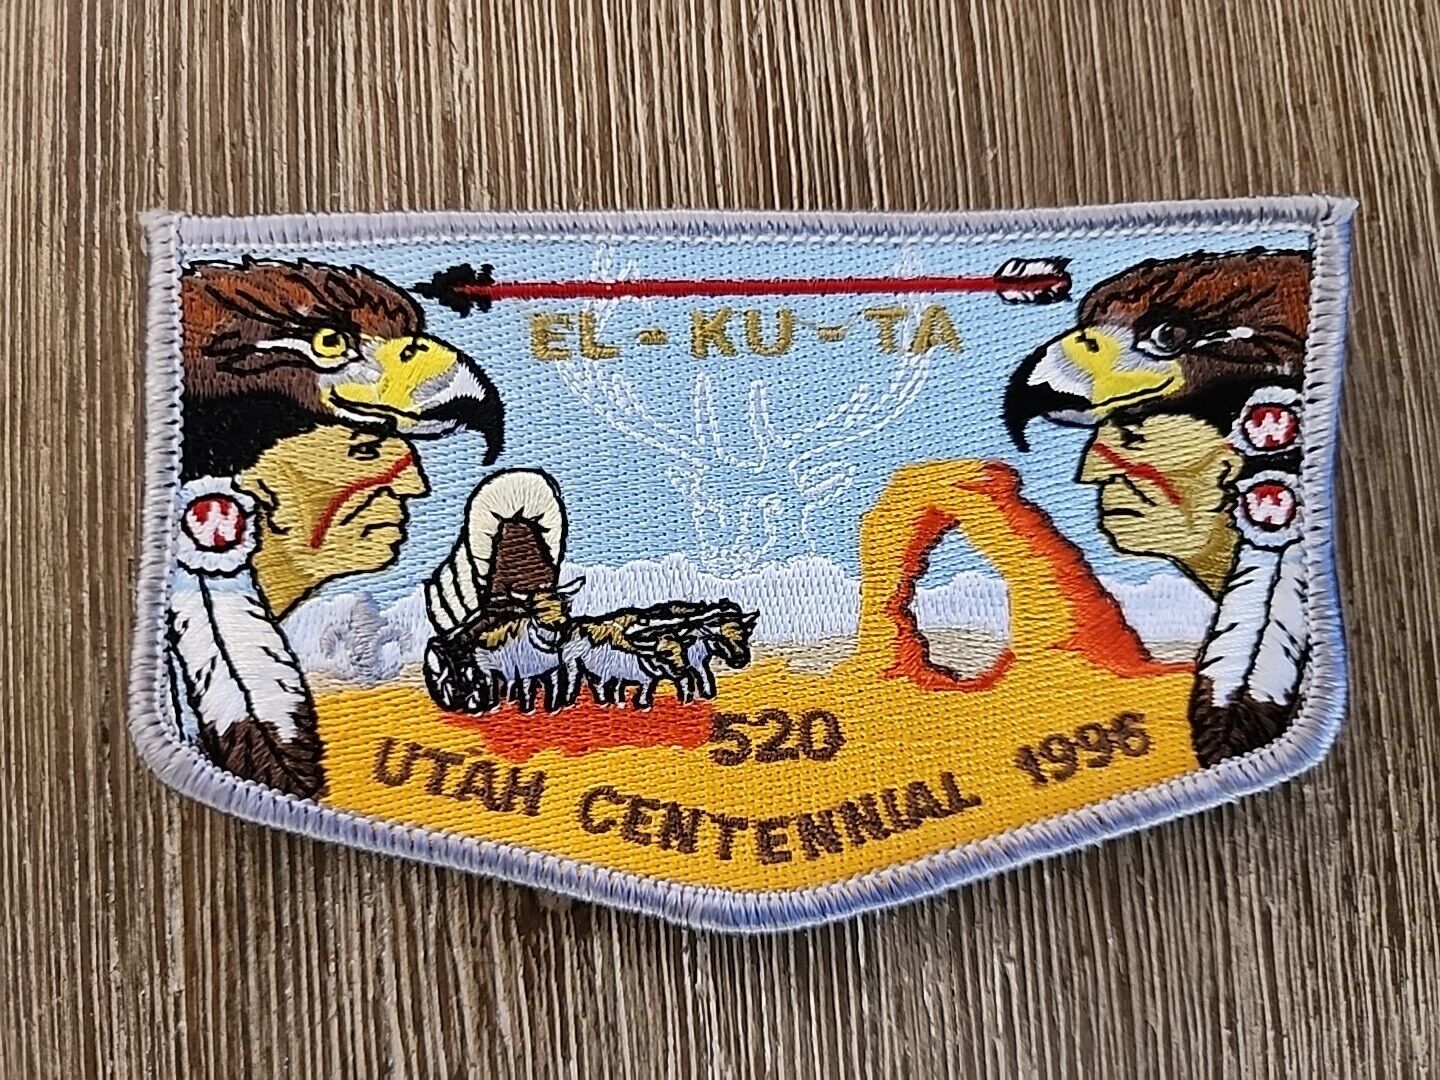 OA El Ku Ta Lodge 520 Centennial Silver Mylar 1996 Flap Great Salt Lake Council